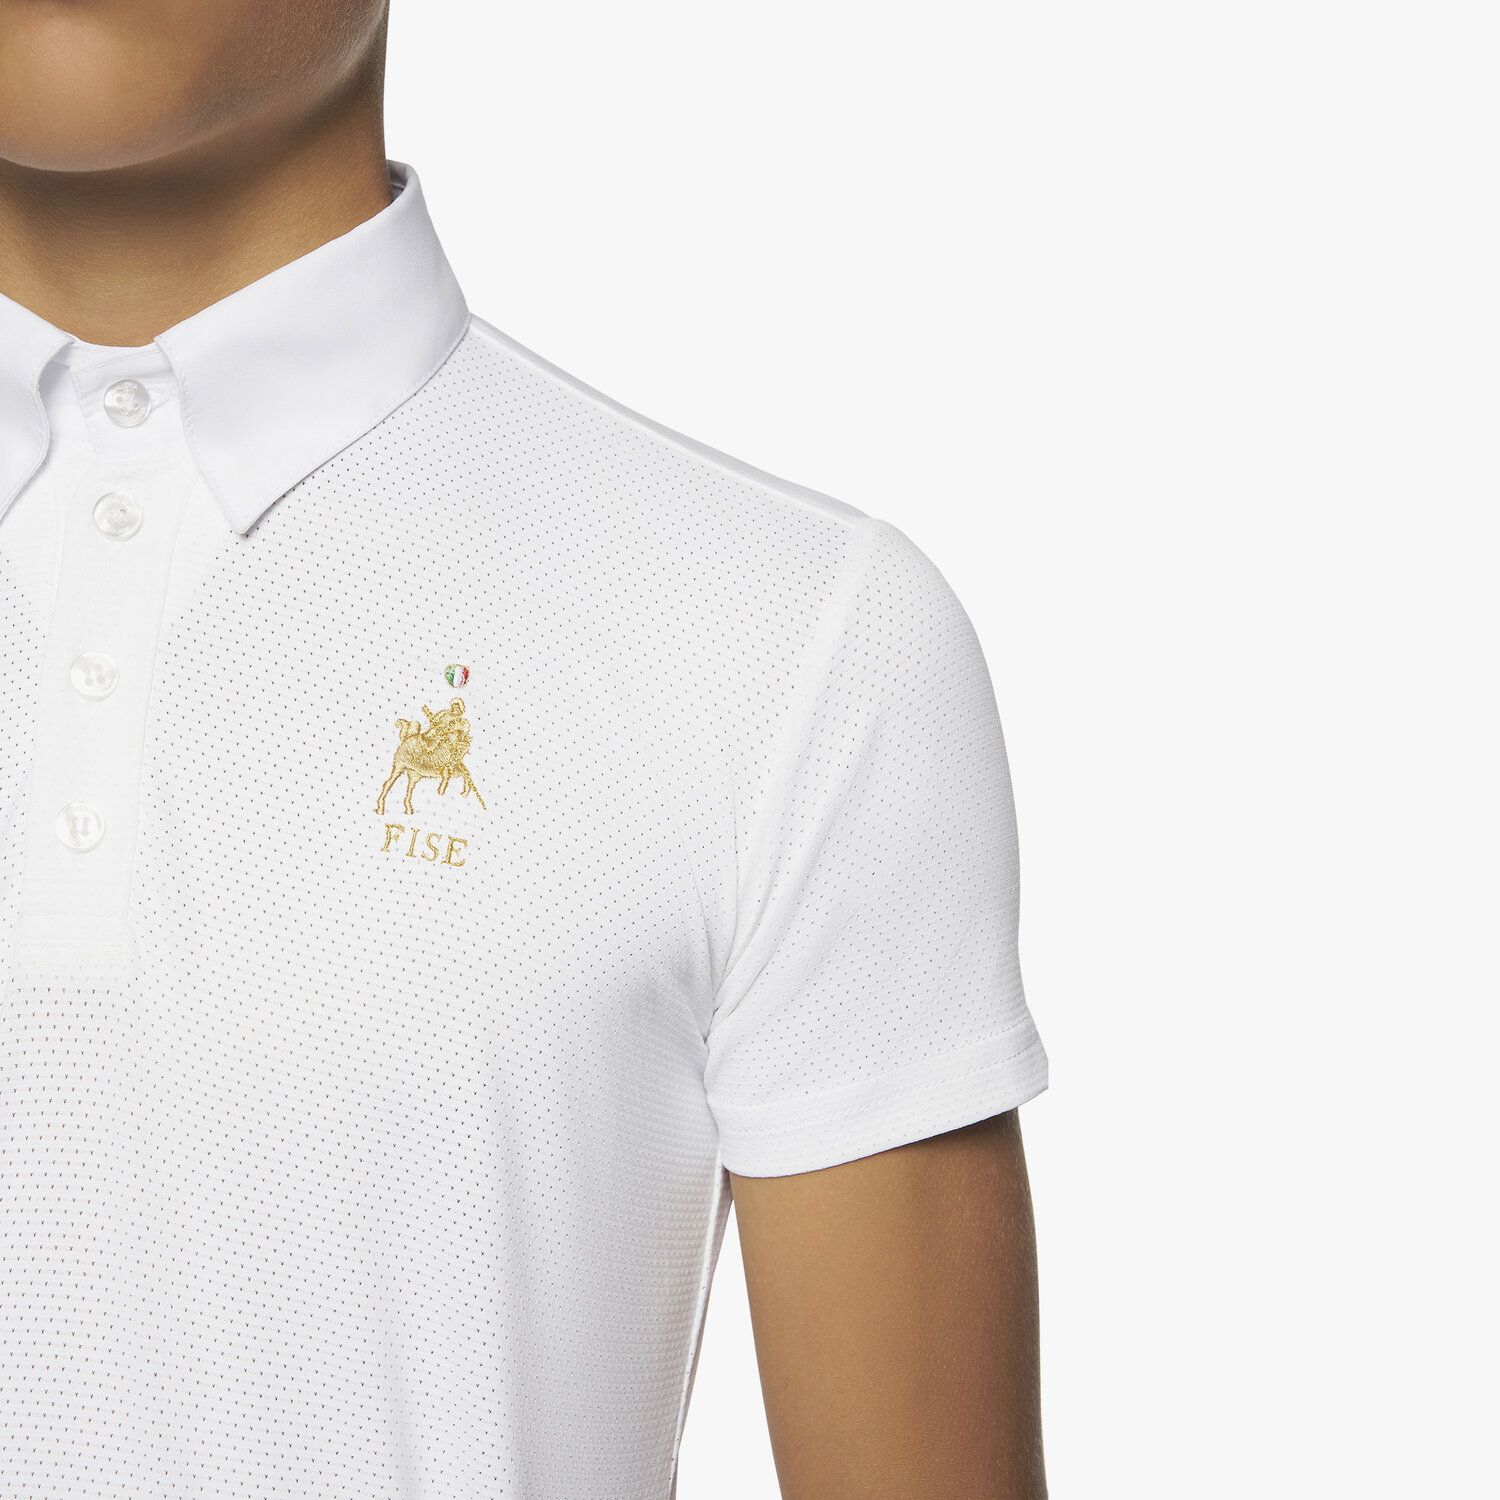 Cavalleria Toscana Boy's FISE polo shirt WHITE-4